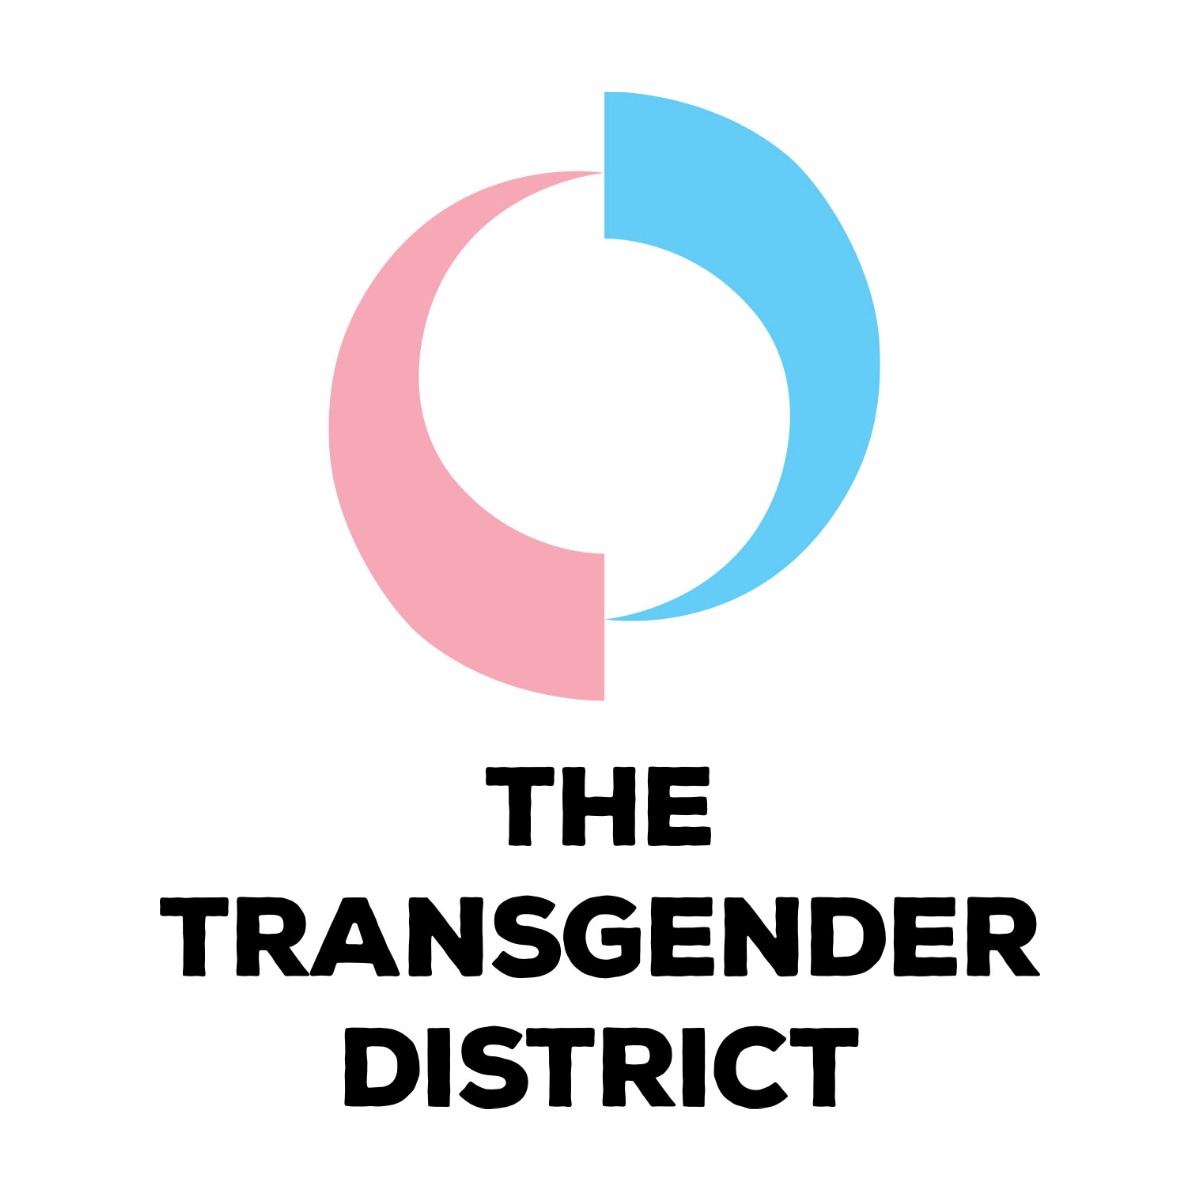 LGBTQ Organization in San Jose California - Transgender District